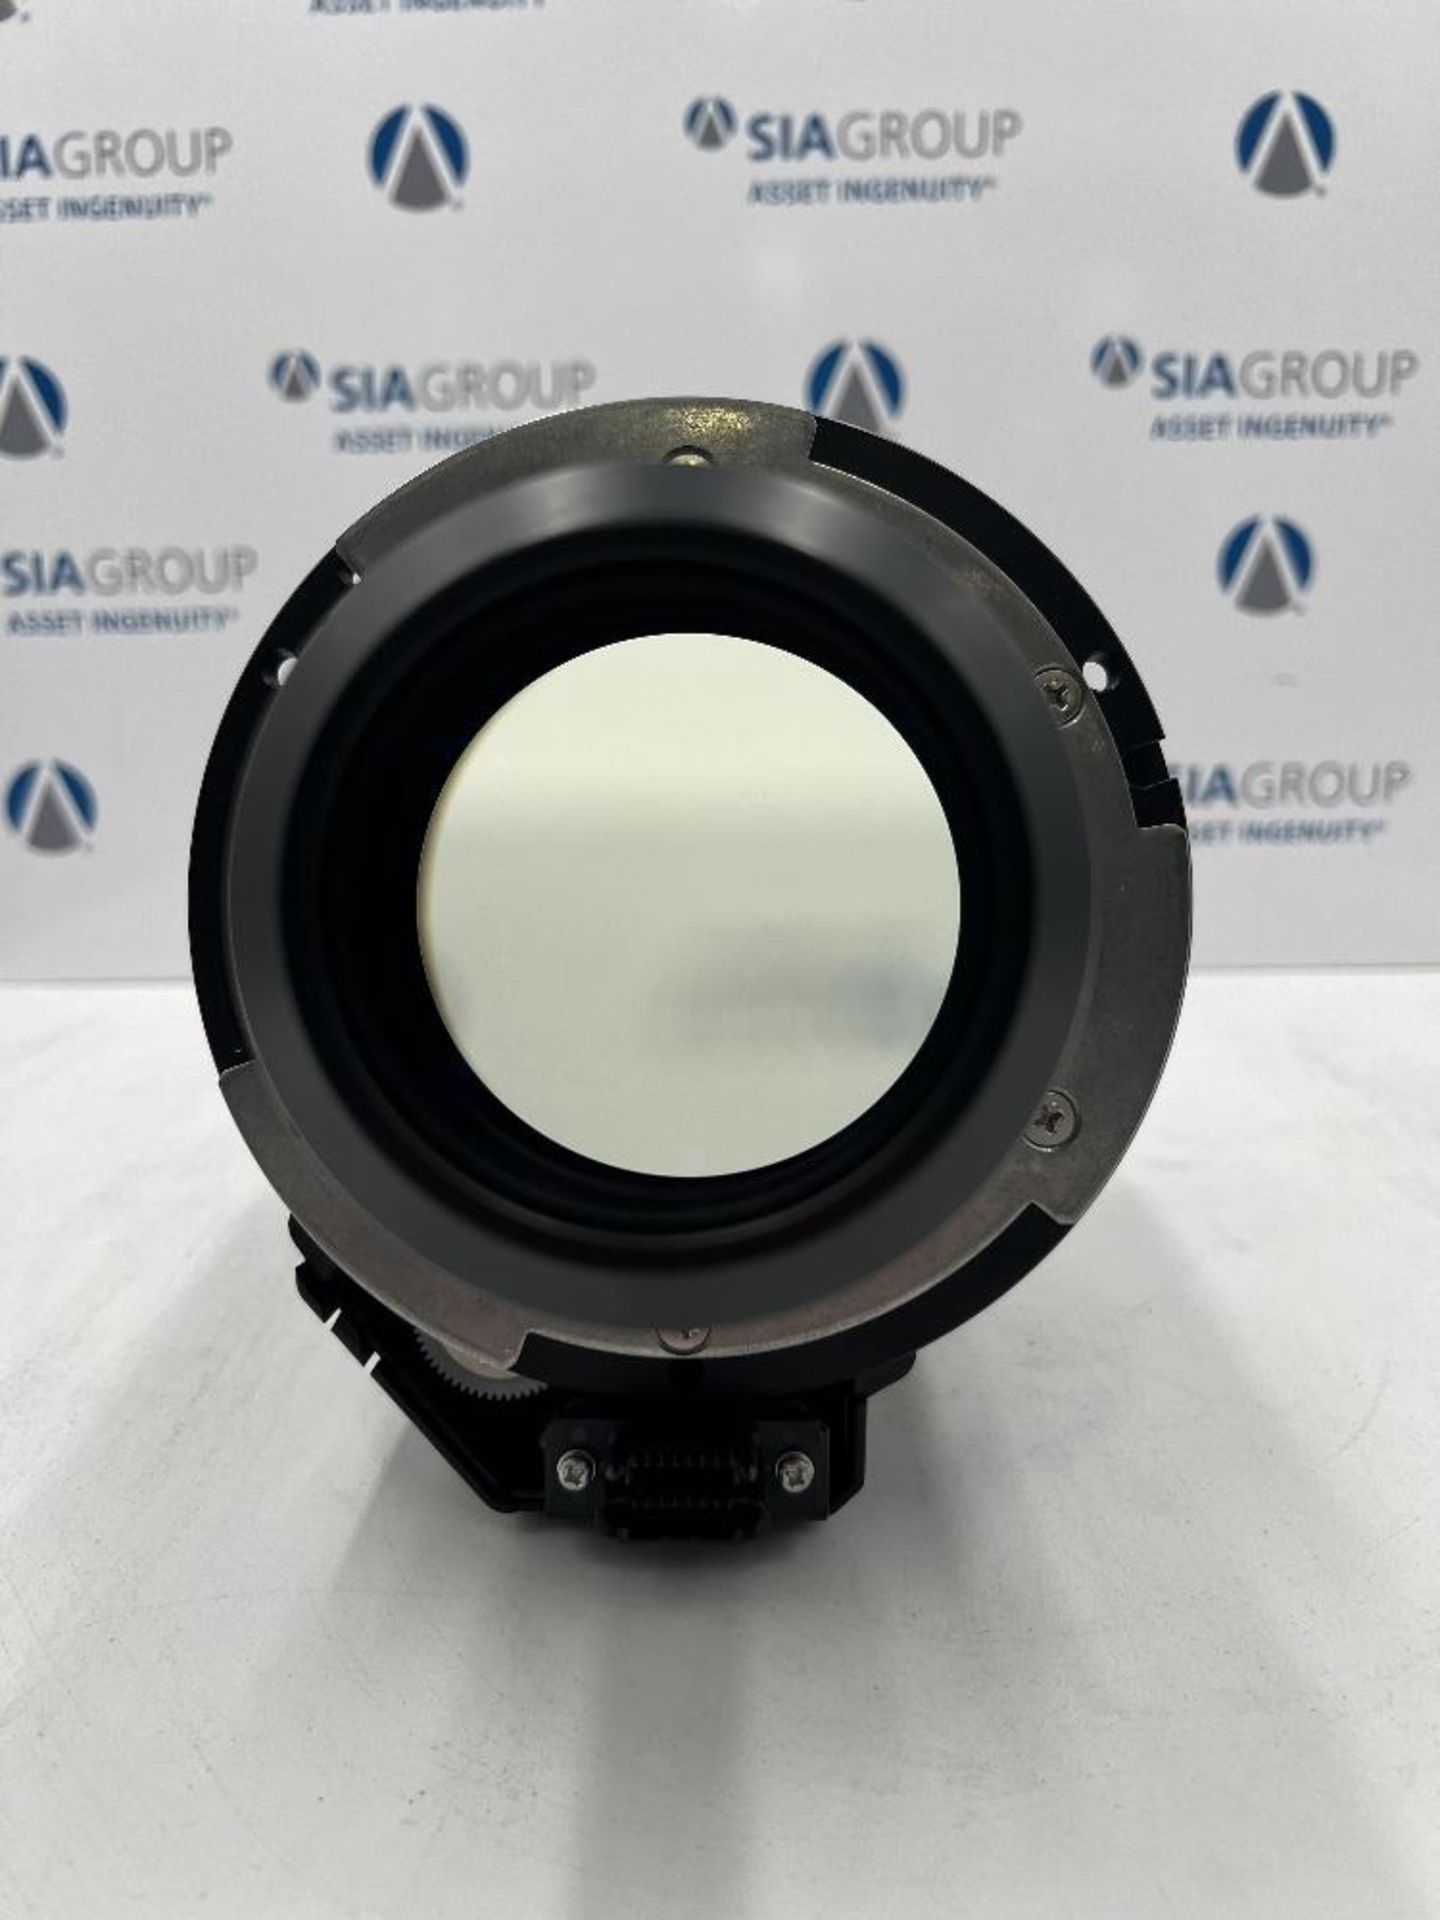 Panasonic ET-D75LE10 1.3-1.7 Zoom Lens With Carrier Case - Image 3 of 9